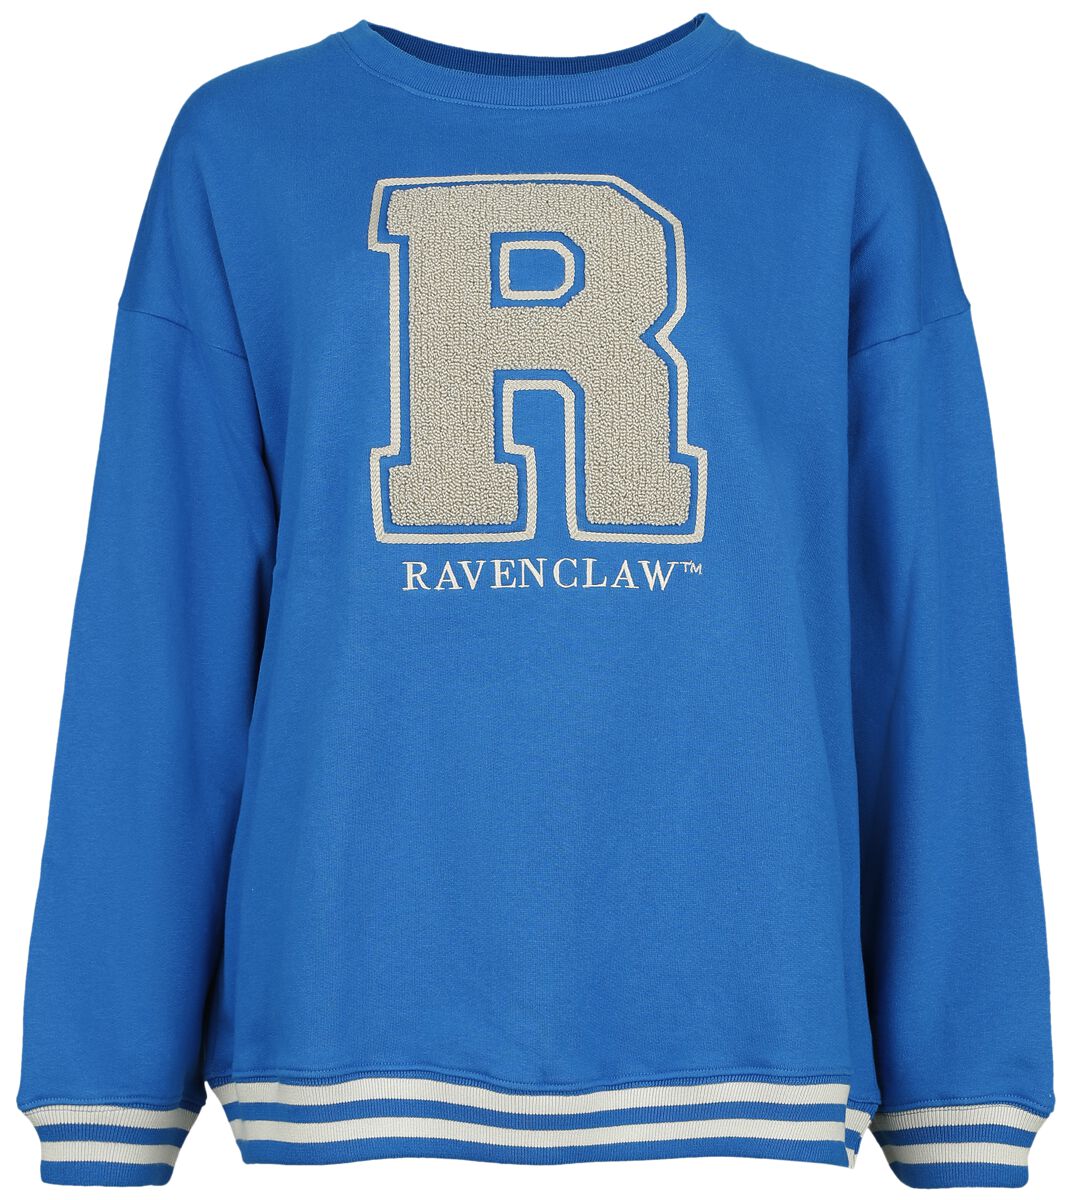 Harry Potter Ravenclaw Sweatshirt blau in M